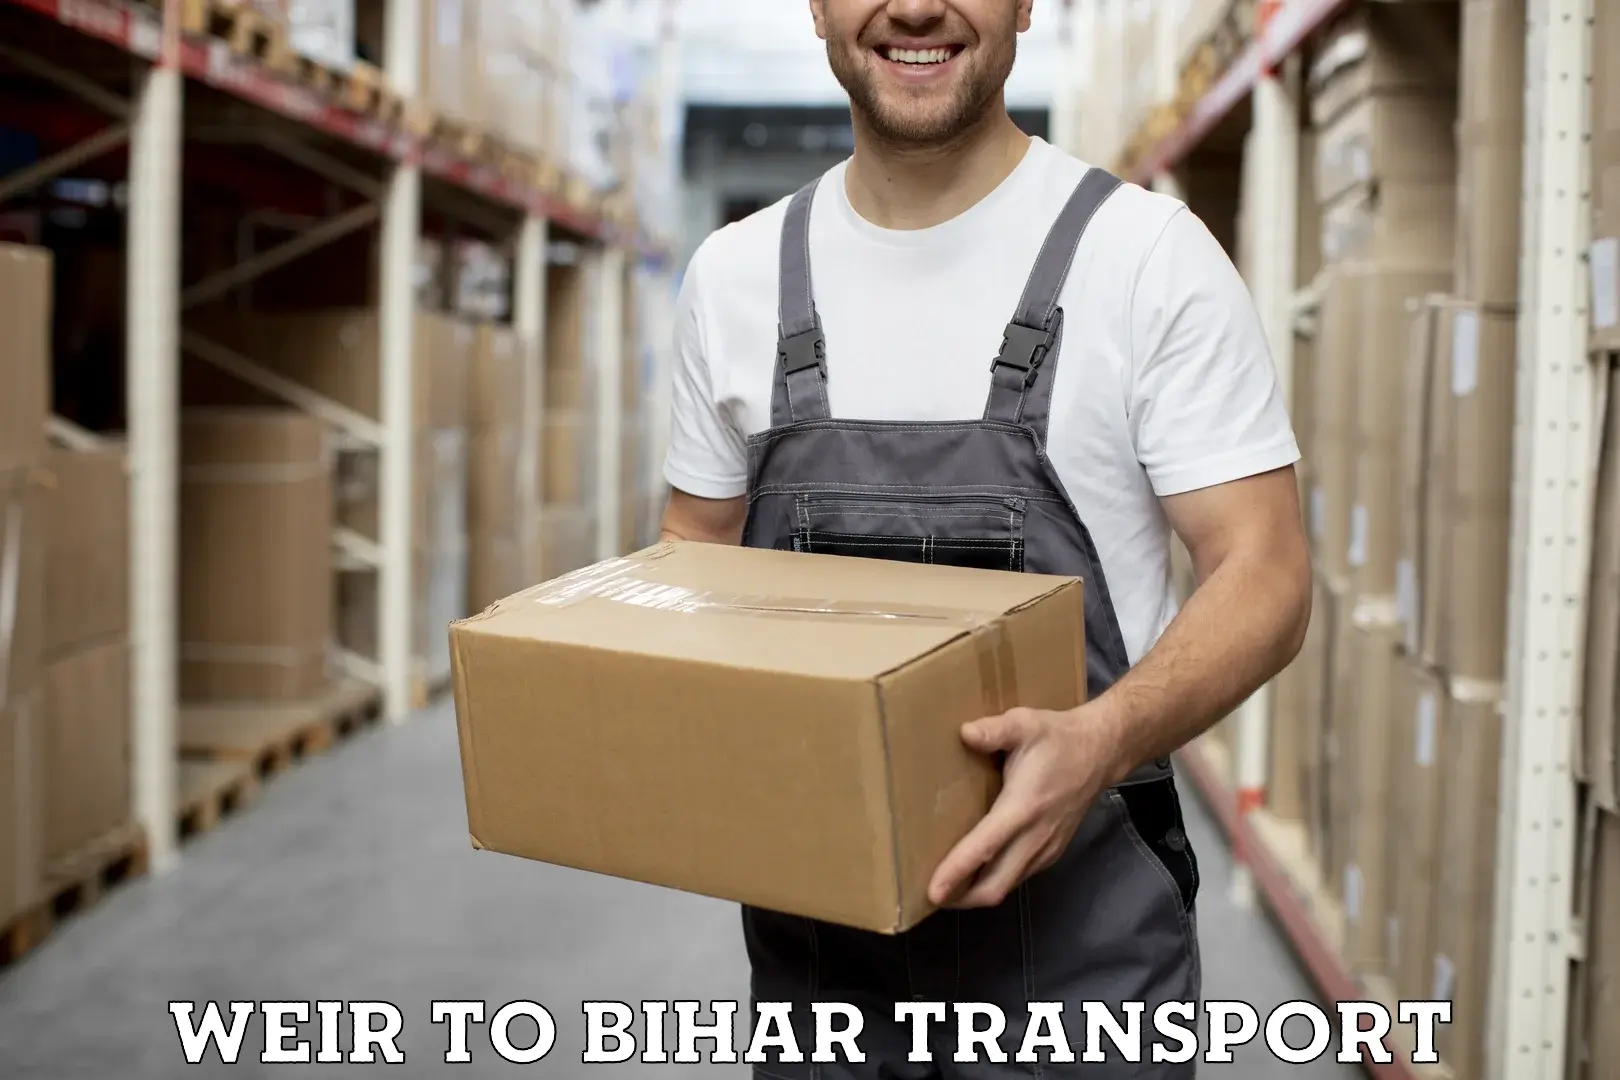 Furniture transport service Weir to Bihar